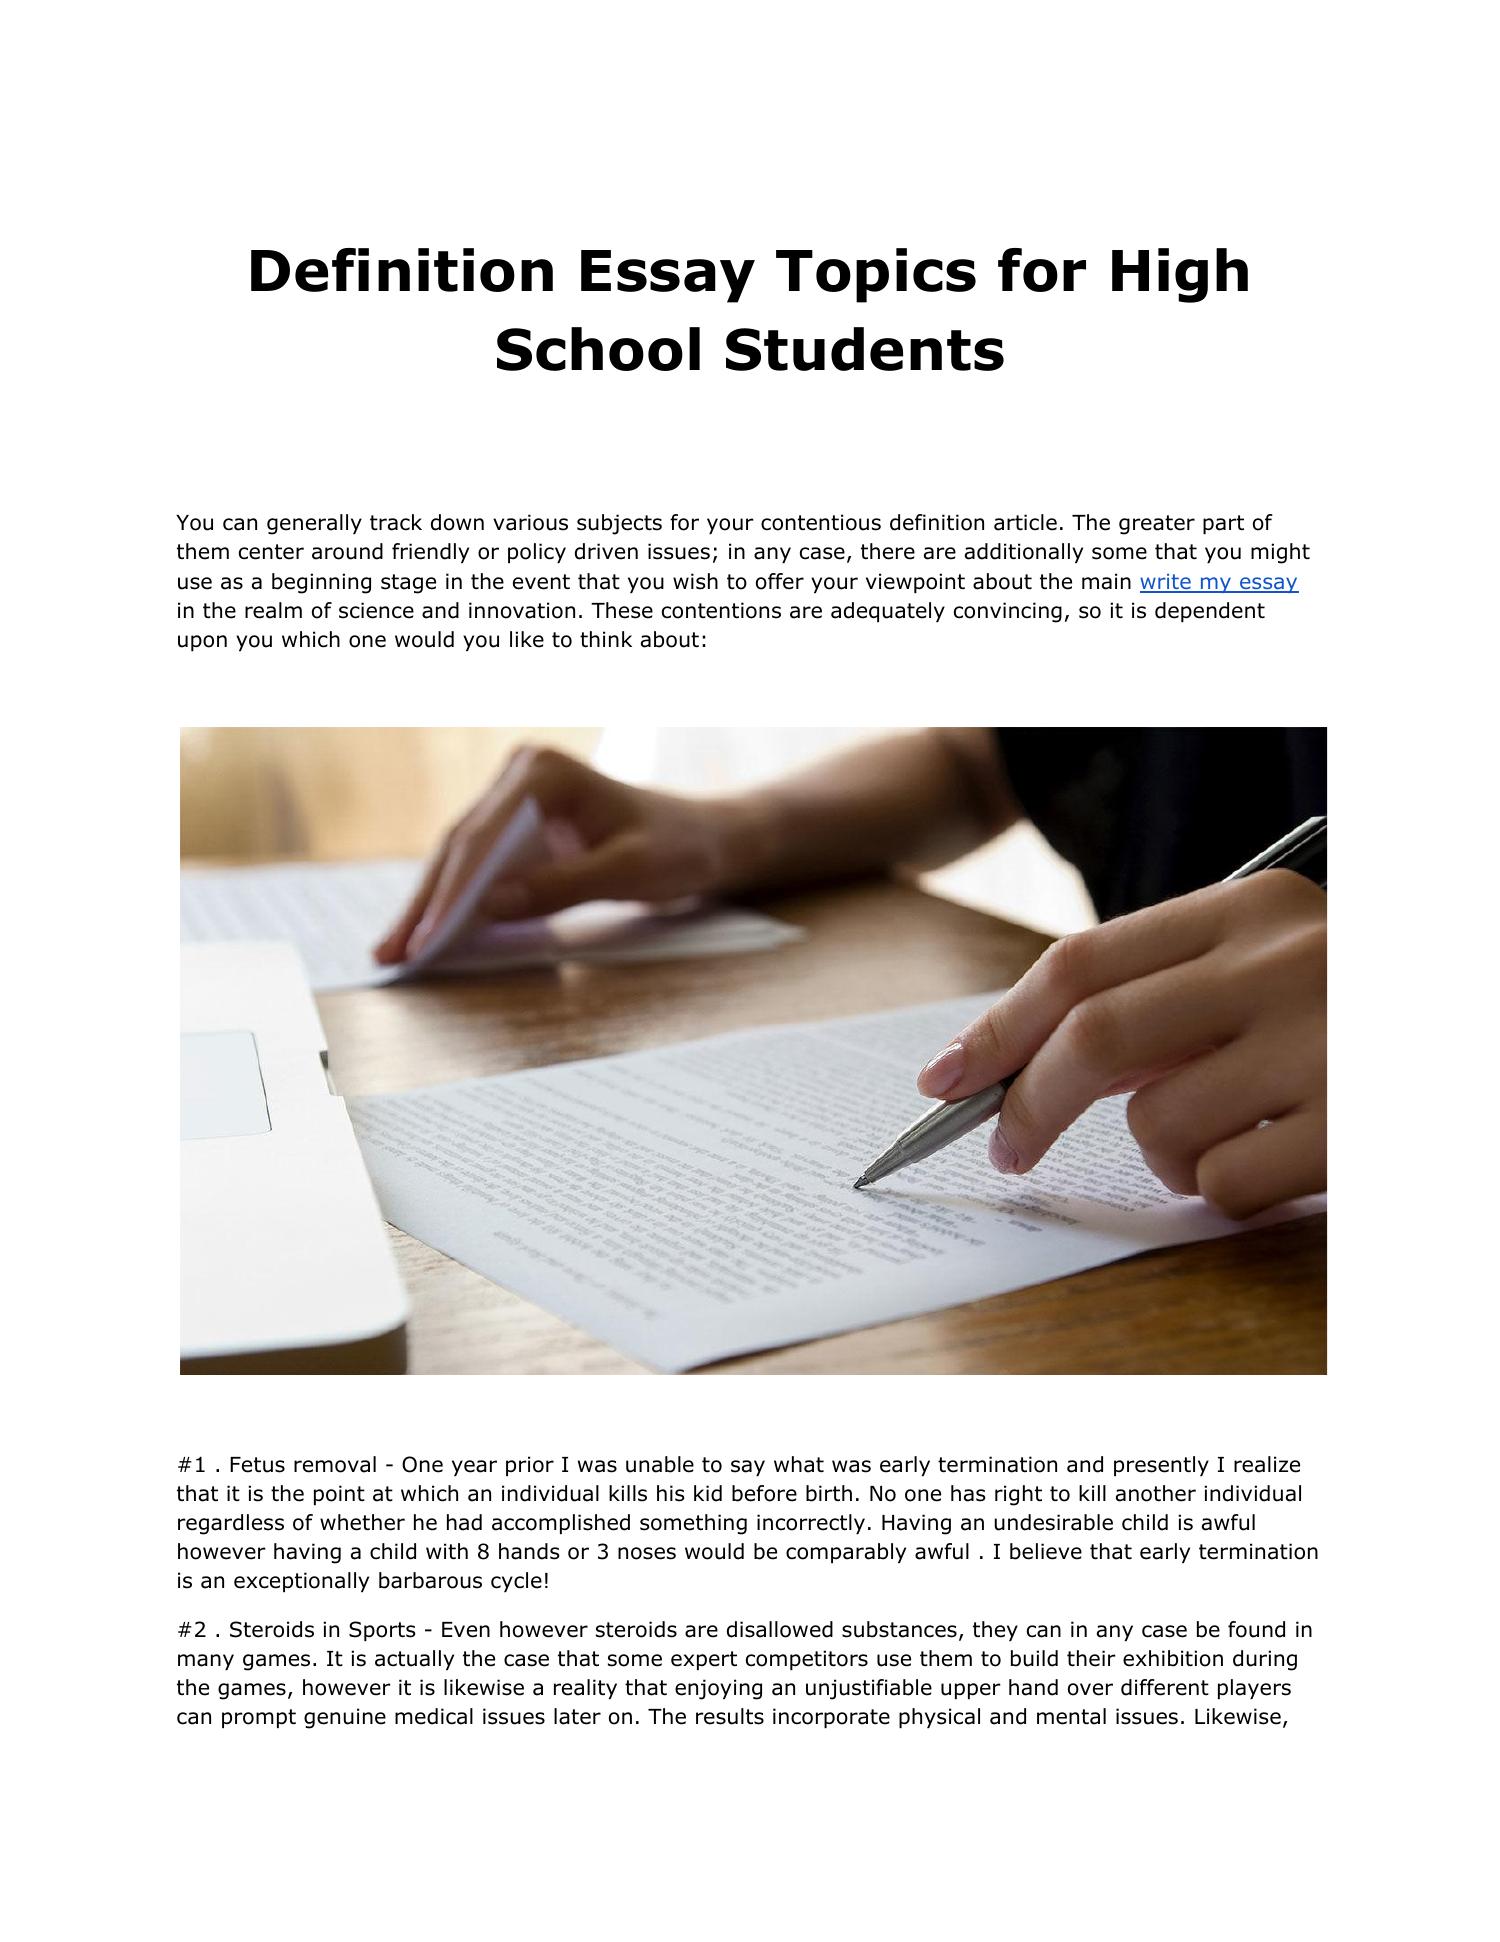 academic essay topics for high school students